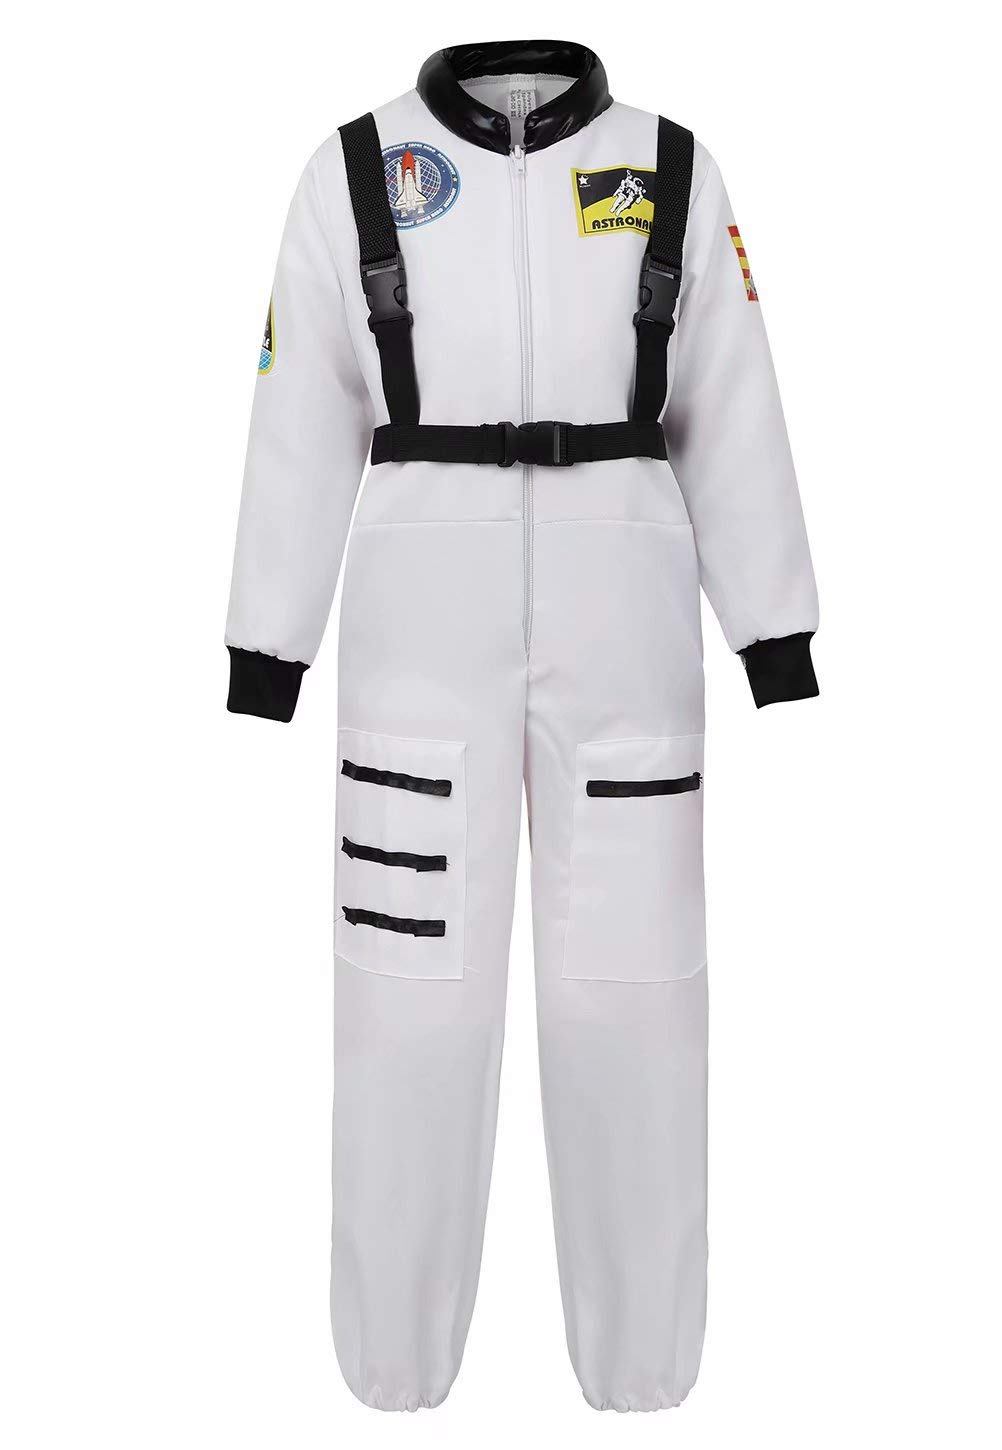 Book Cover Jutrisujo Astronaut Costume for Kids Space Suit Boys Girls Astronaut Halloween Costumes Dress Up